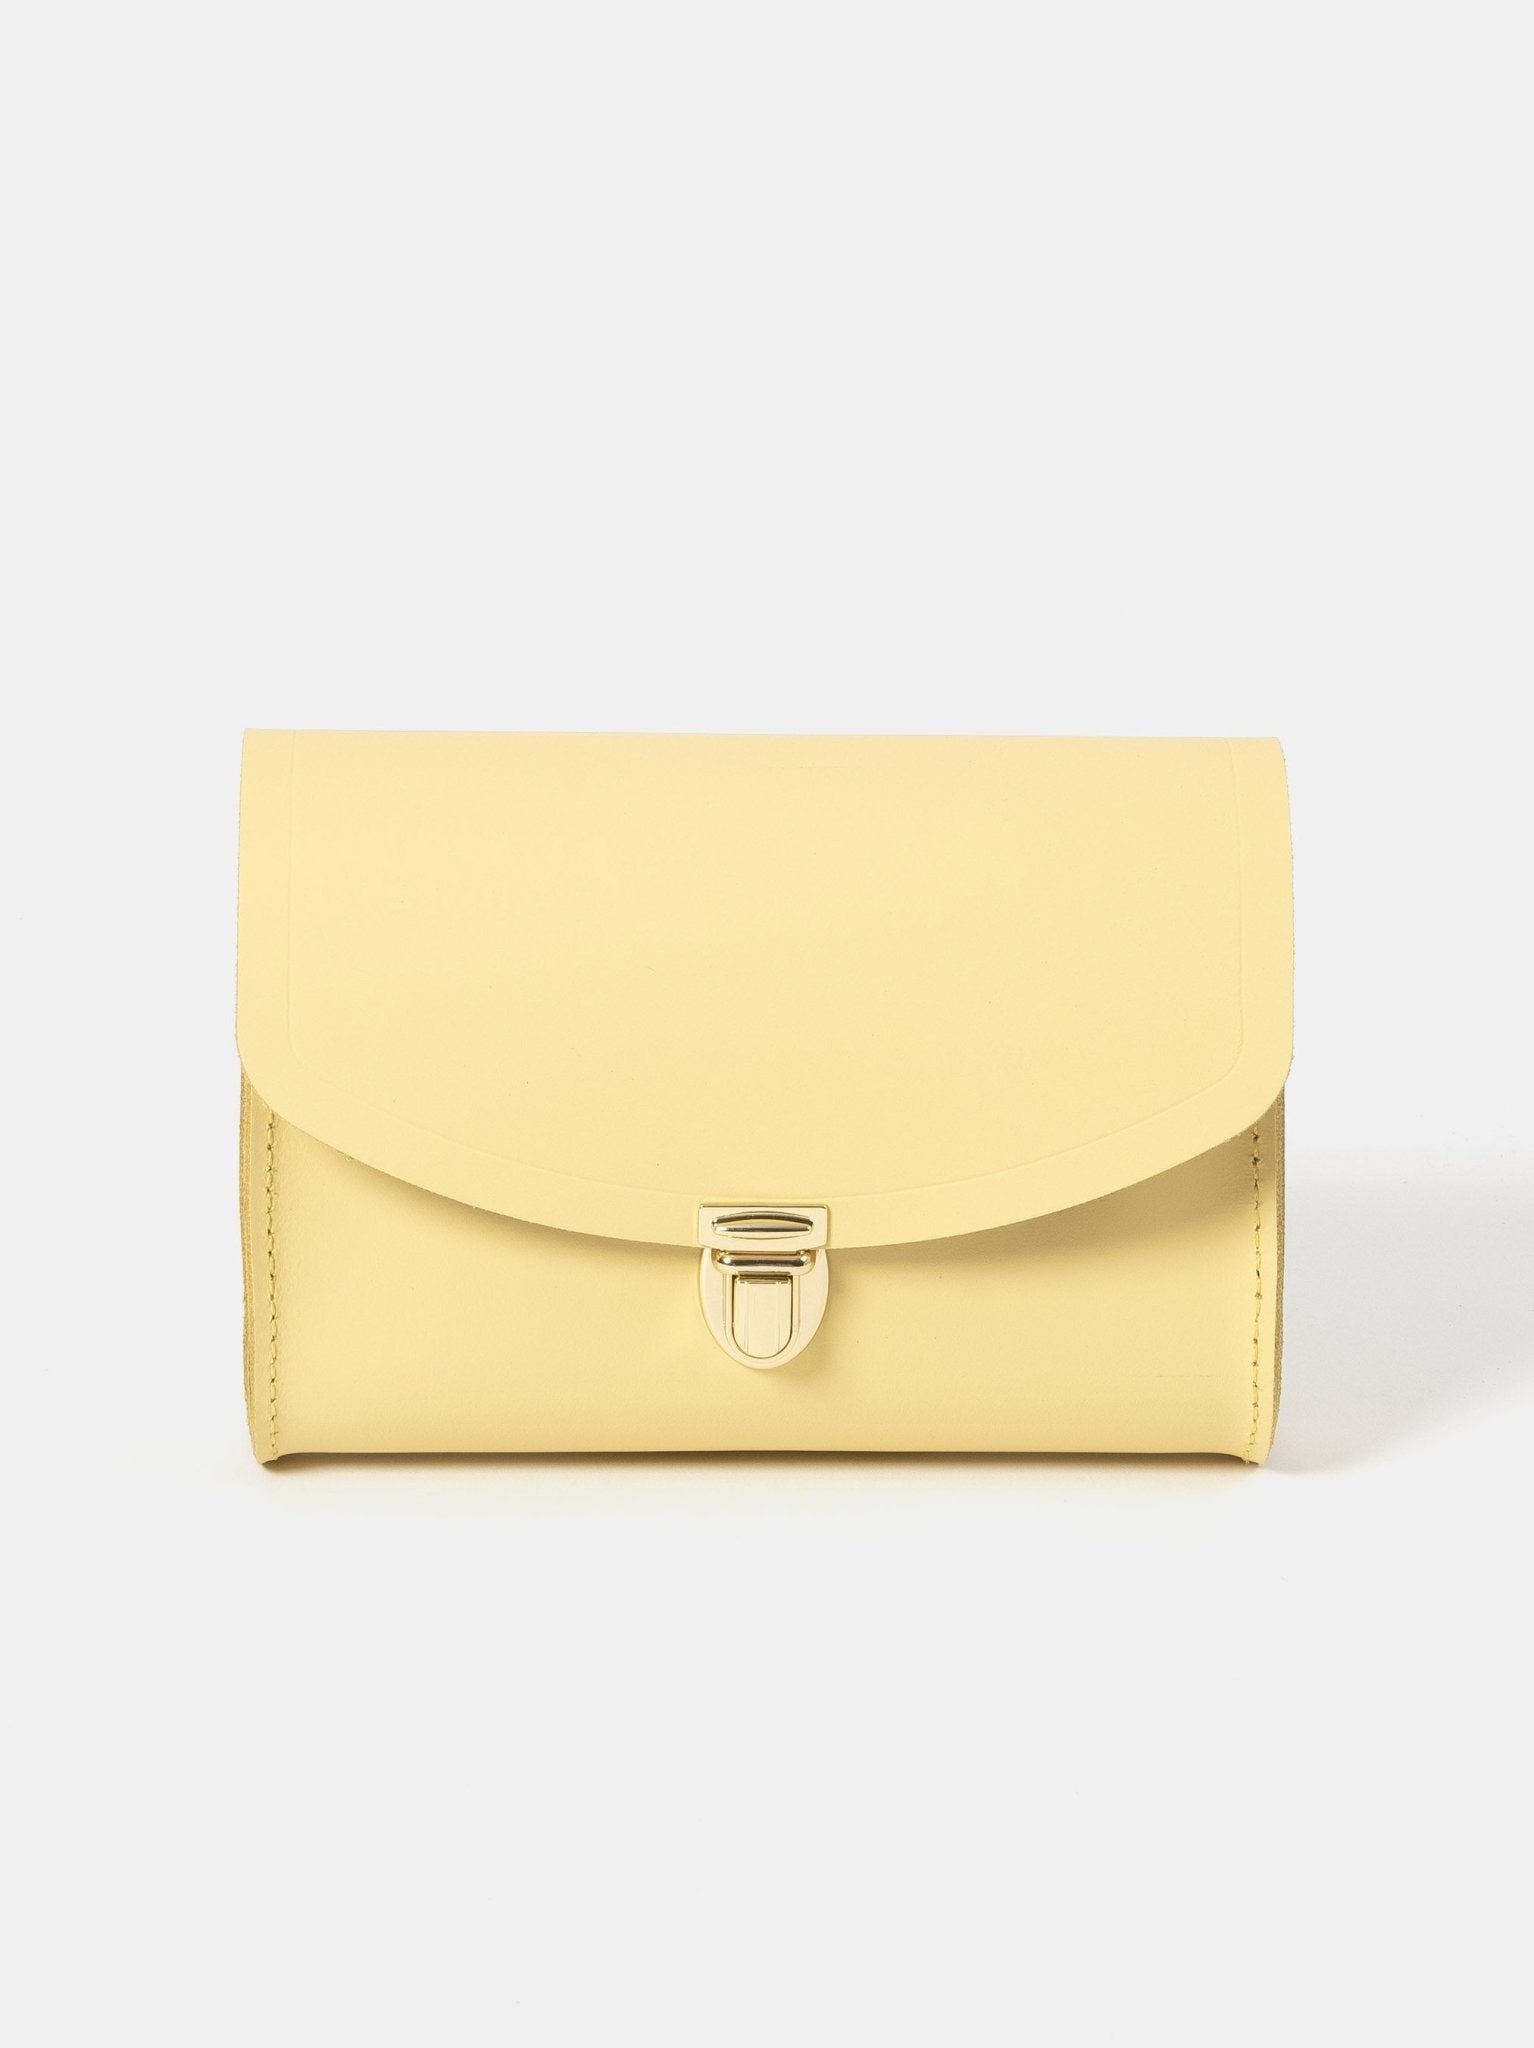 The Cambridge Satchel Co. Women's Yellow Handbag